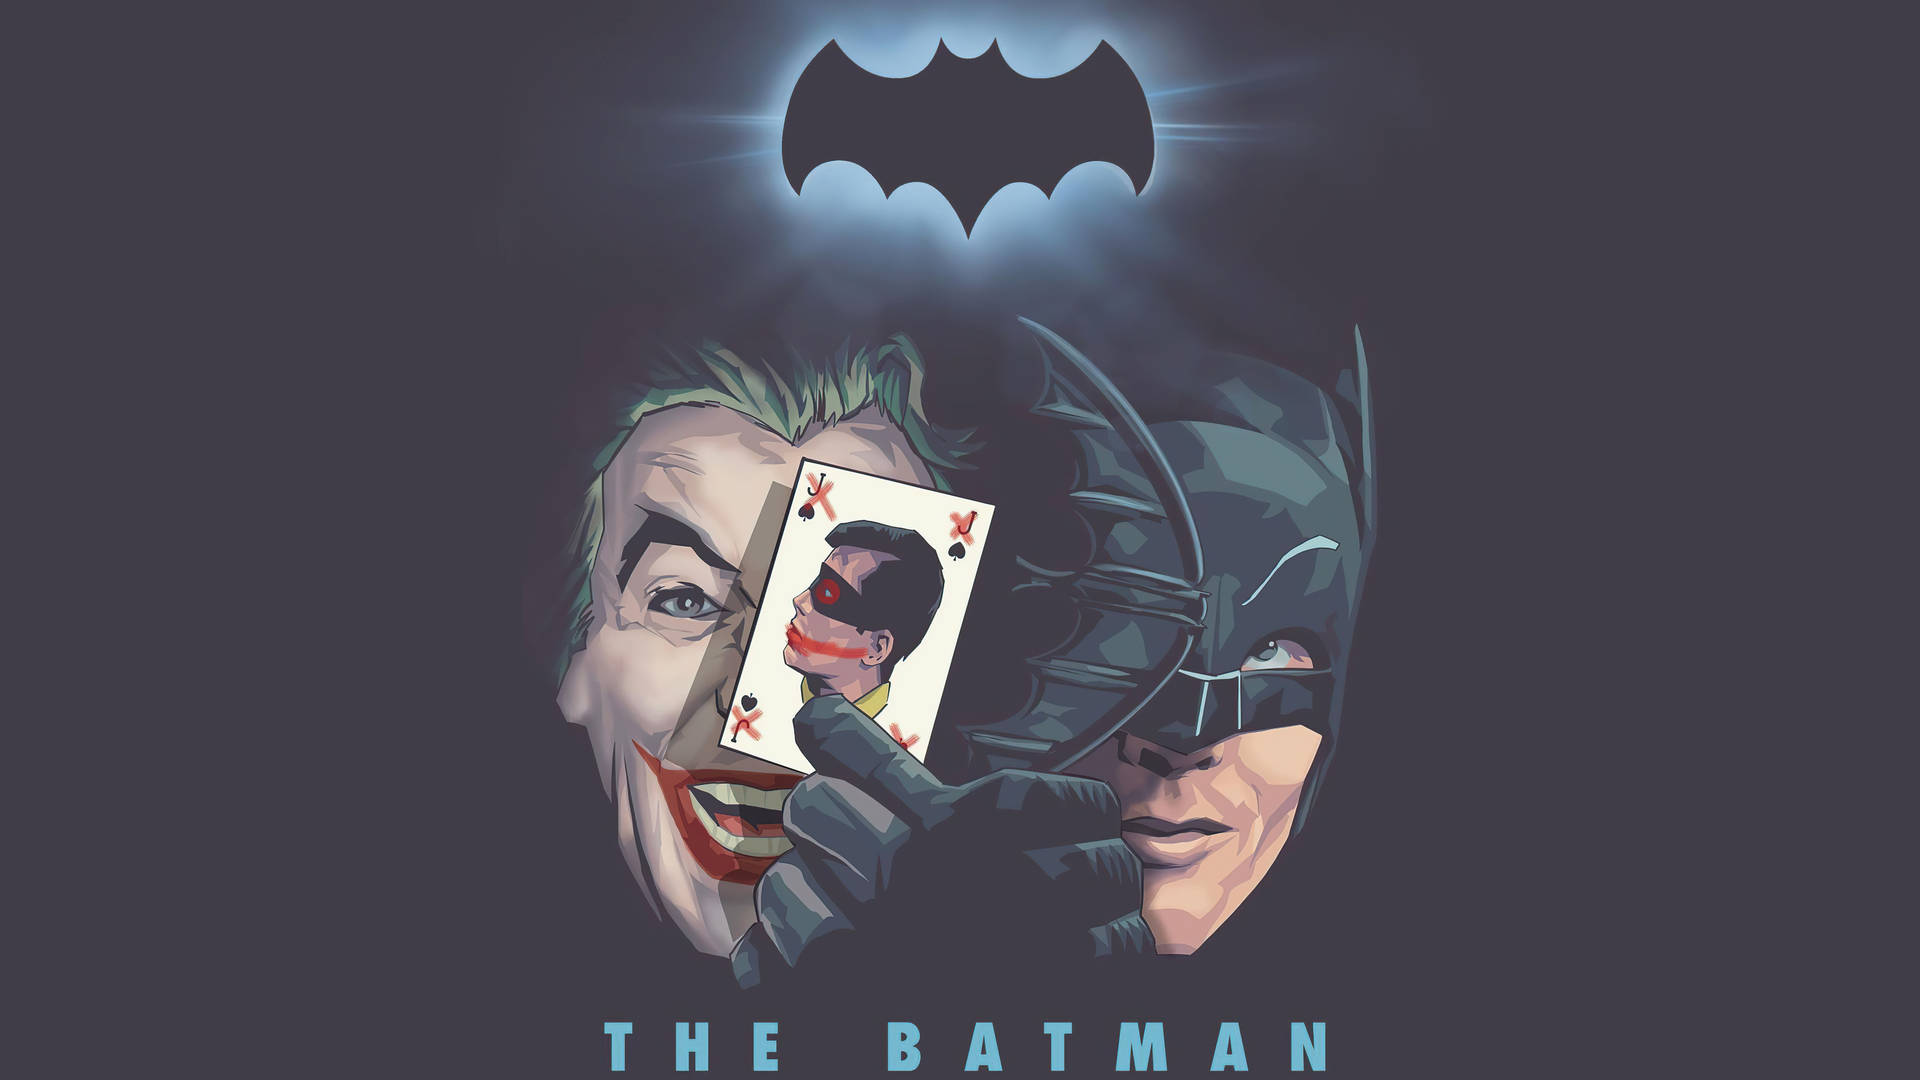 Classic Black Ultra Hd Joker And Batman Poster